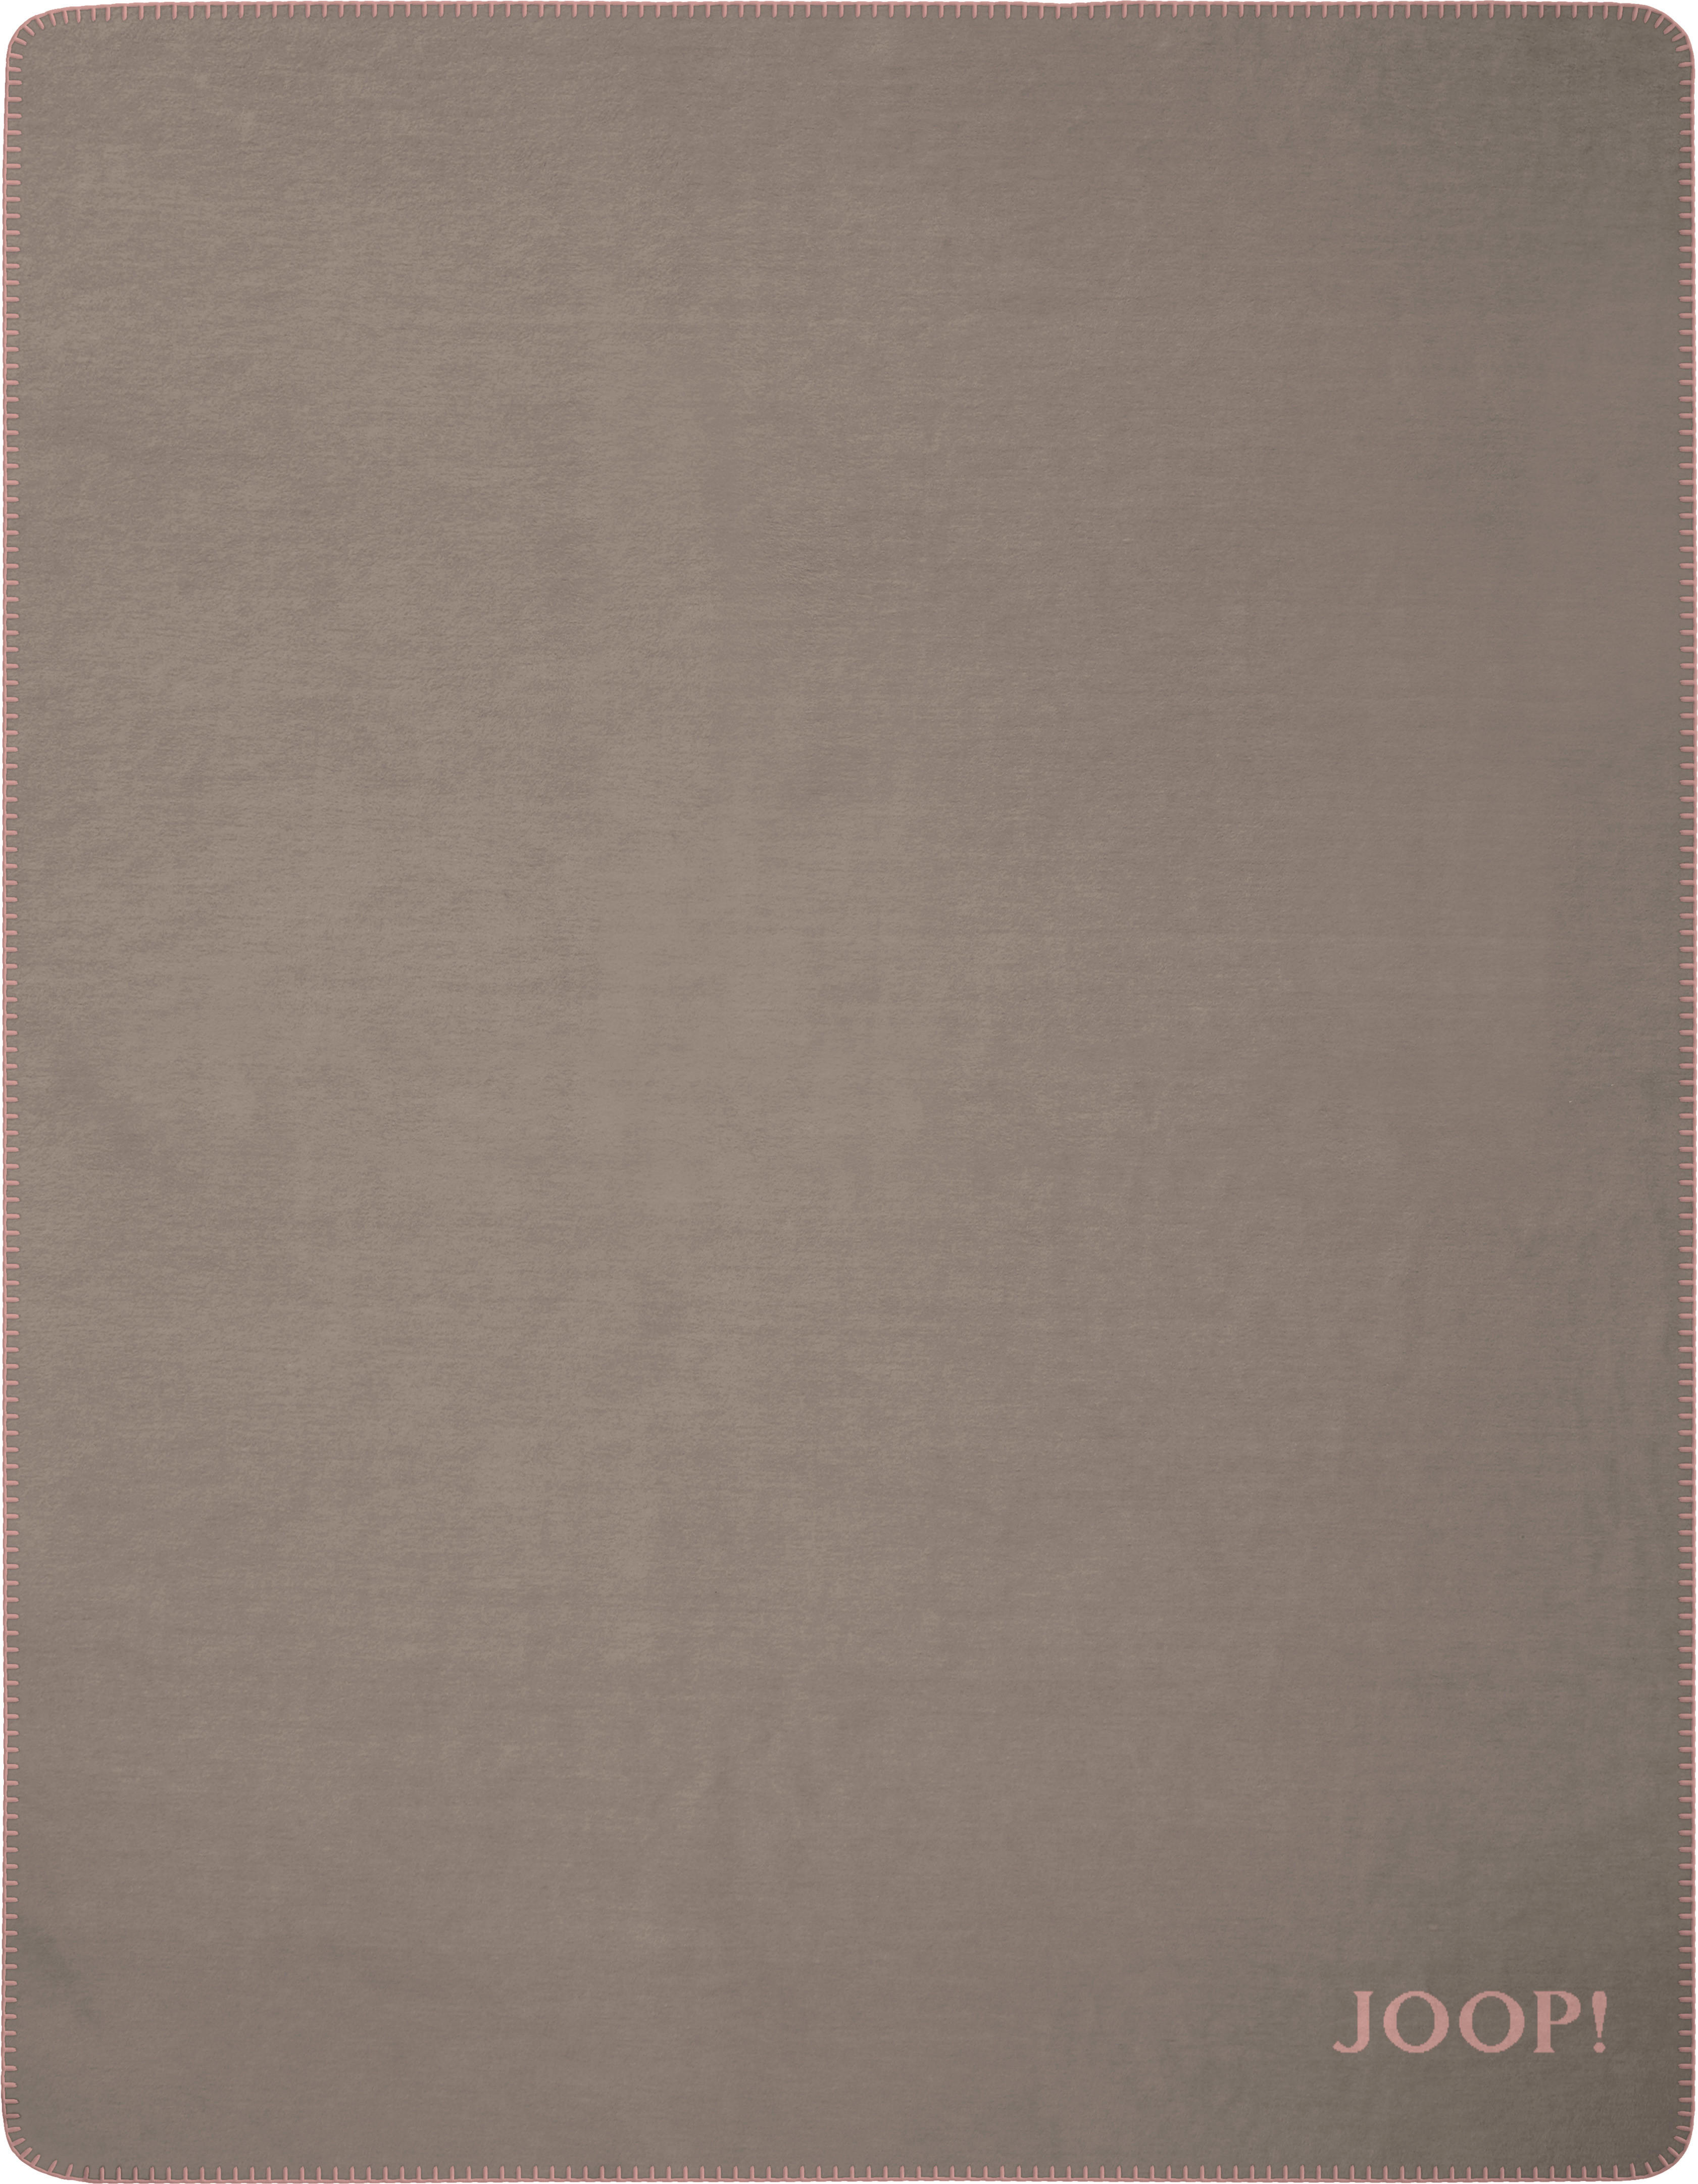 WOHNDECKE Uni Doubleface 150/200 cm  - Taupe/Hellrosa, KONVENTIONELL, Textil (150/200cm) - Joop!